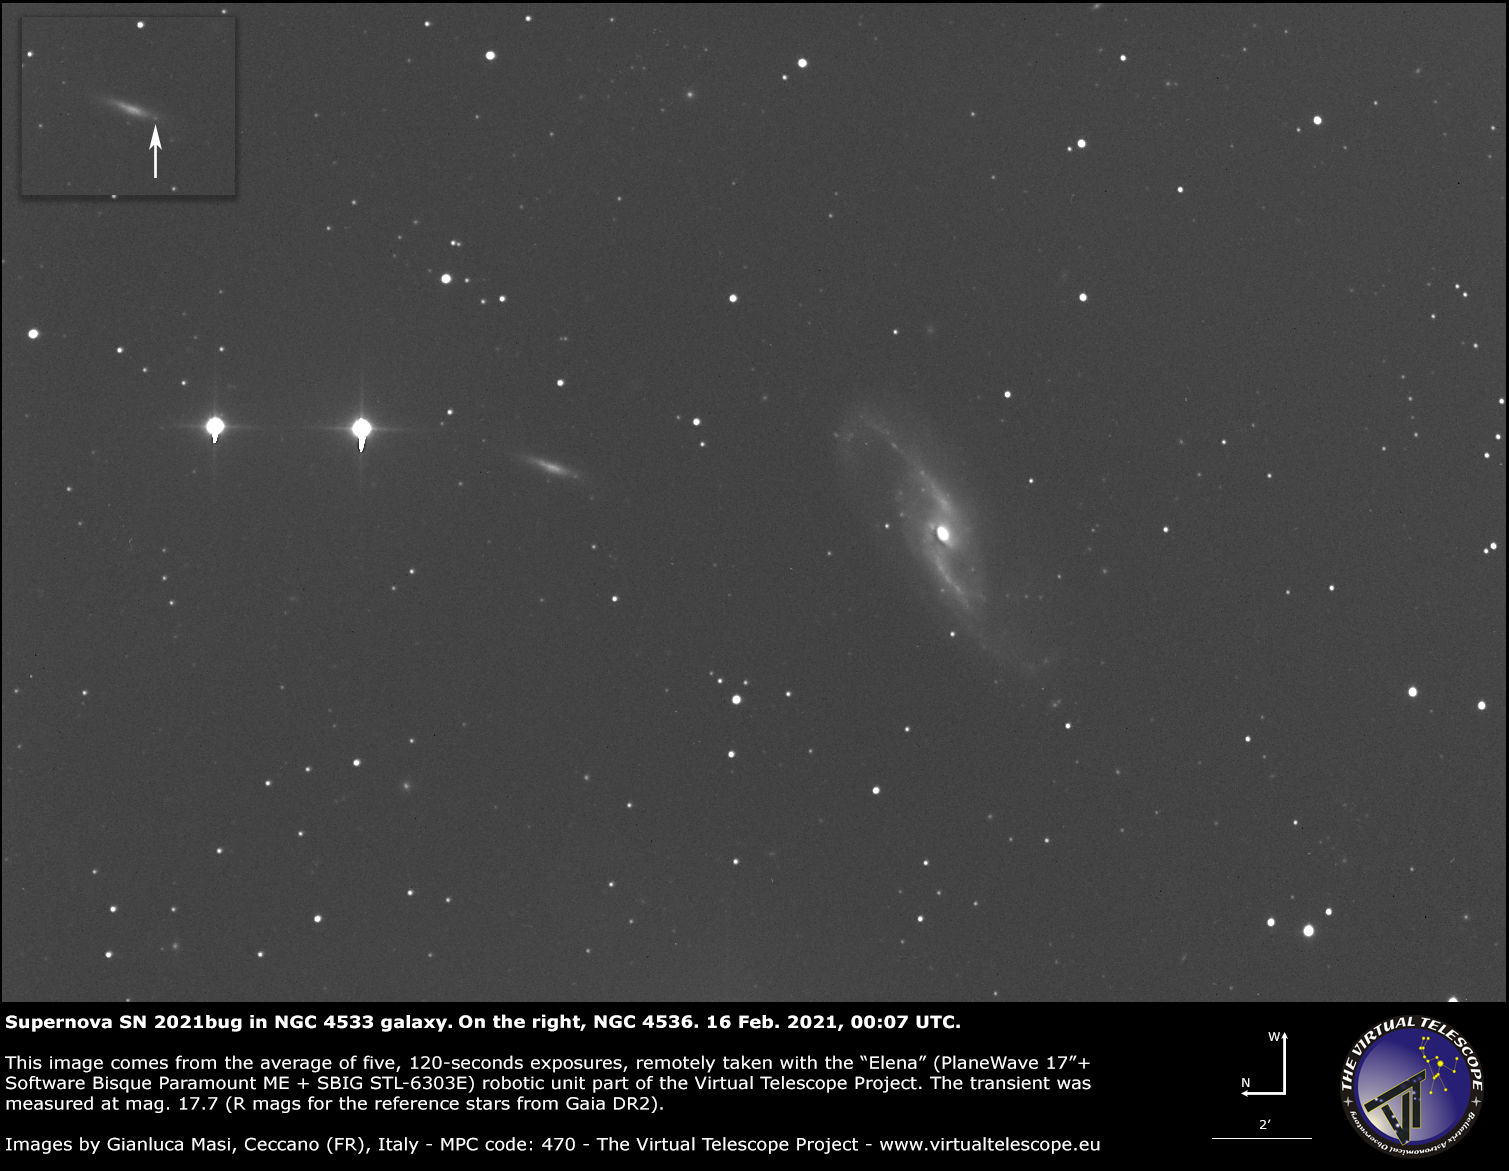 Supernova SN 2021bug in NGC 4533 galaxy: 16 Feb. 2021.